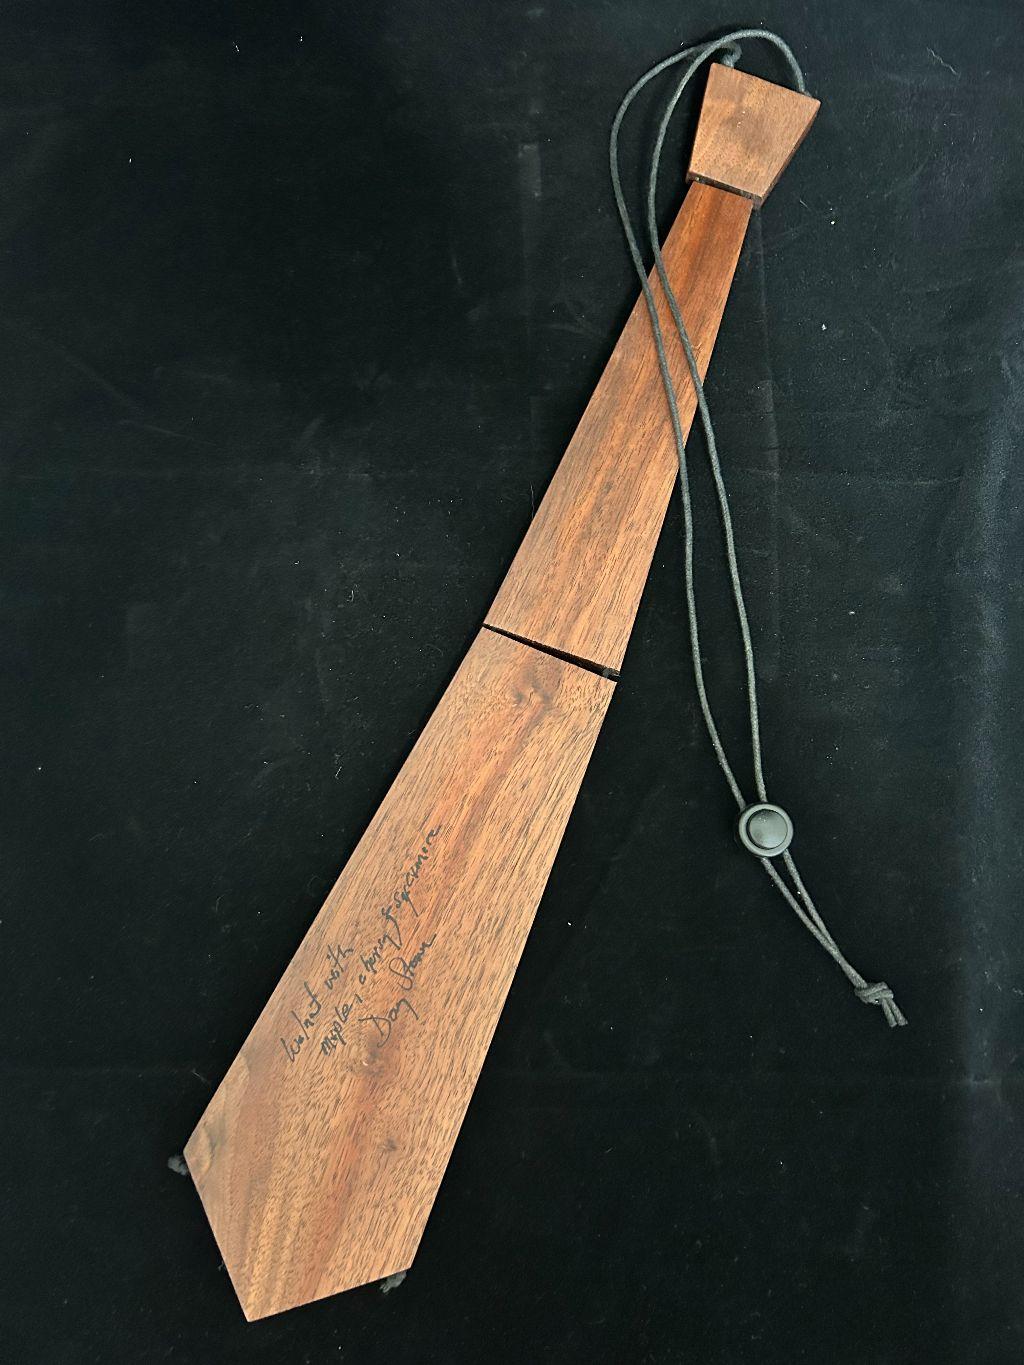 Wooden Tie by Doug Stowe